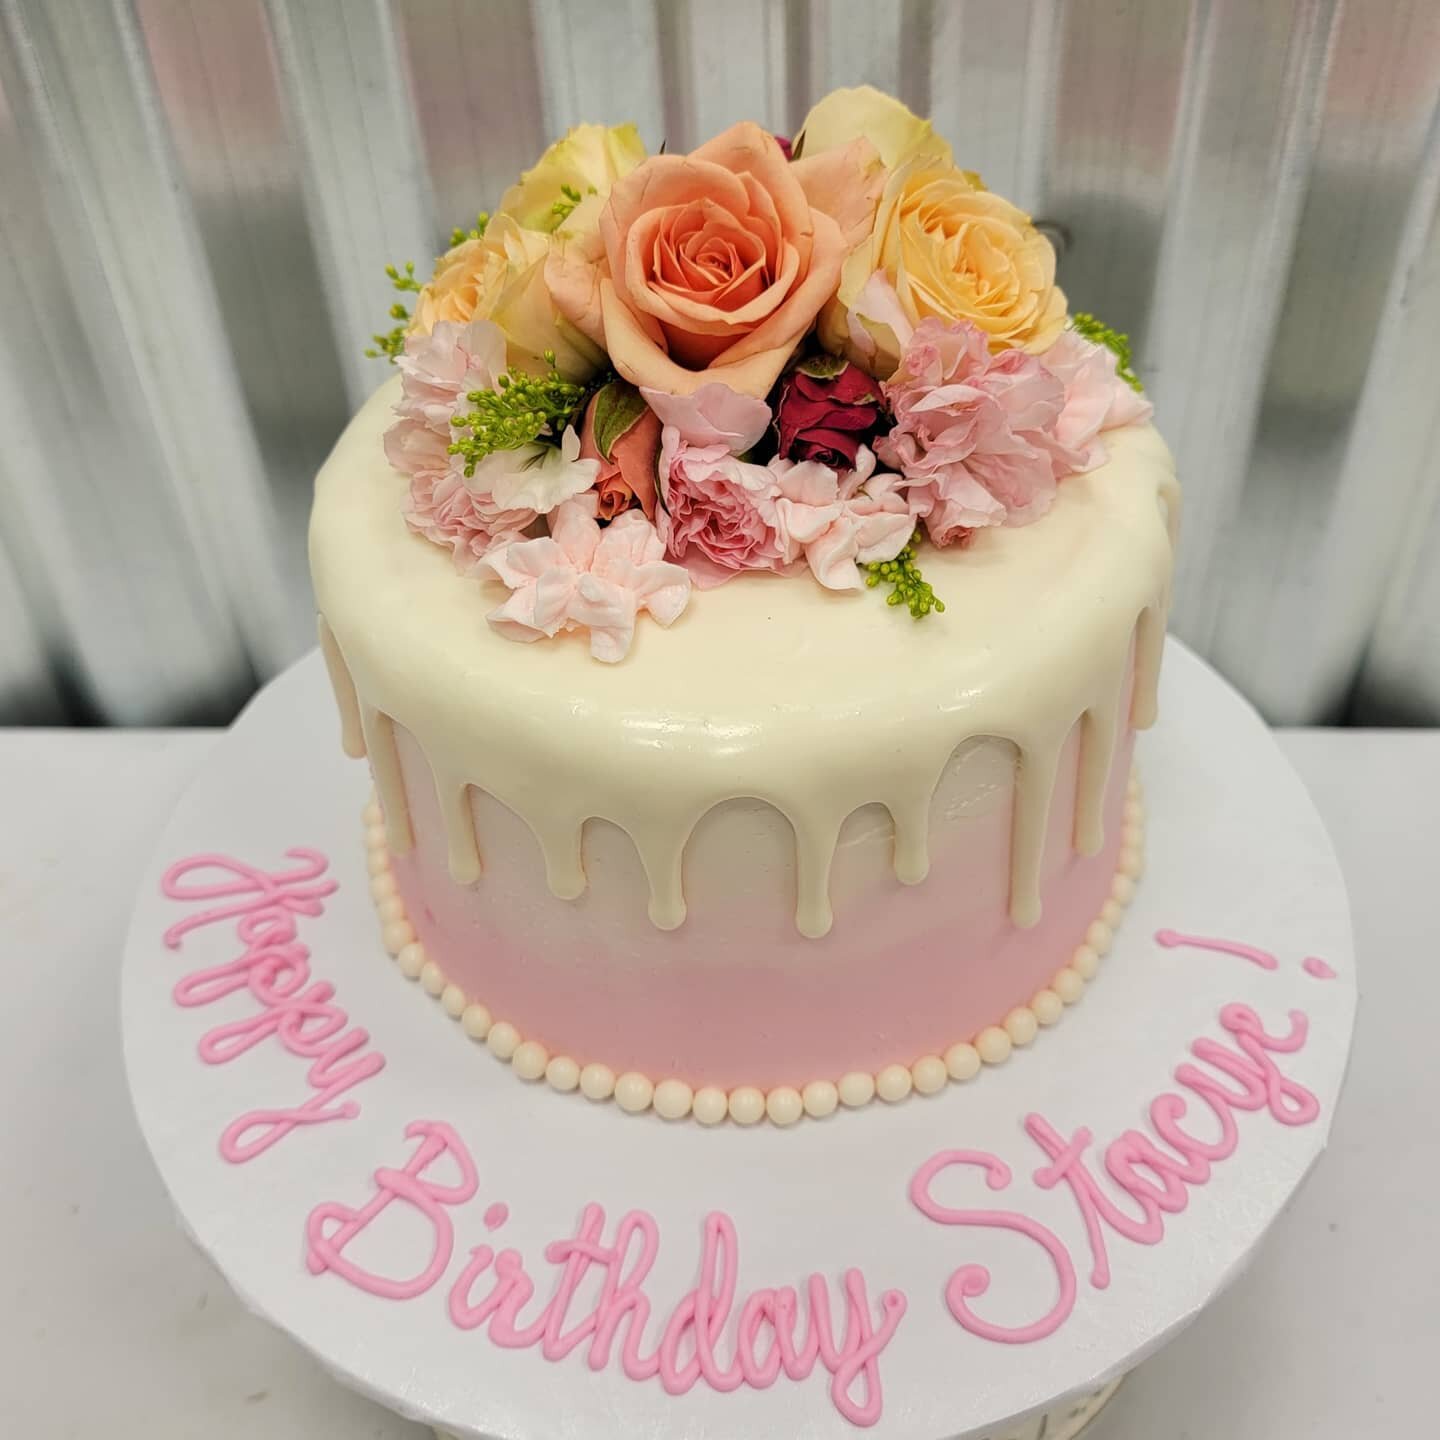 Happy birthday Stacye!

#sweetnessinyourlife #bestcakeson30a #birthdaycakes #cakesofinstagram #seagroveplaza #southwalton #30alocalbusiness #madefromscratch #madewithlove #sweeton30a